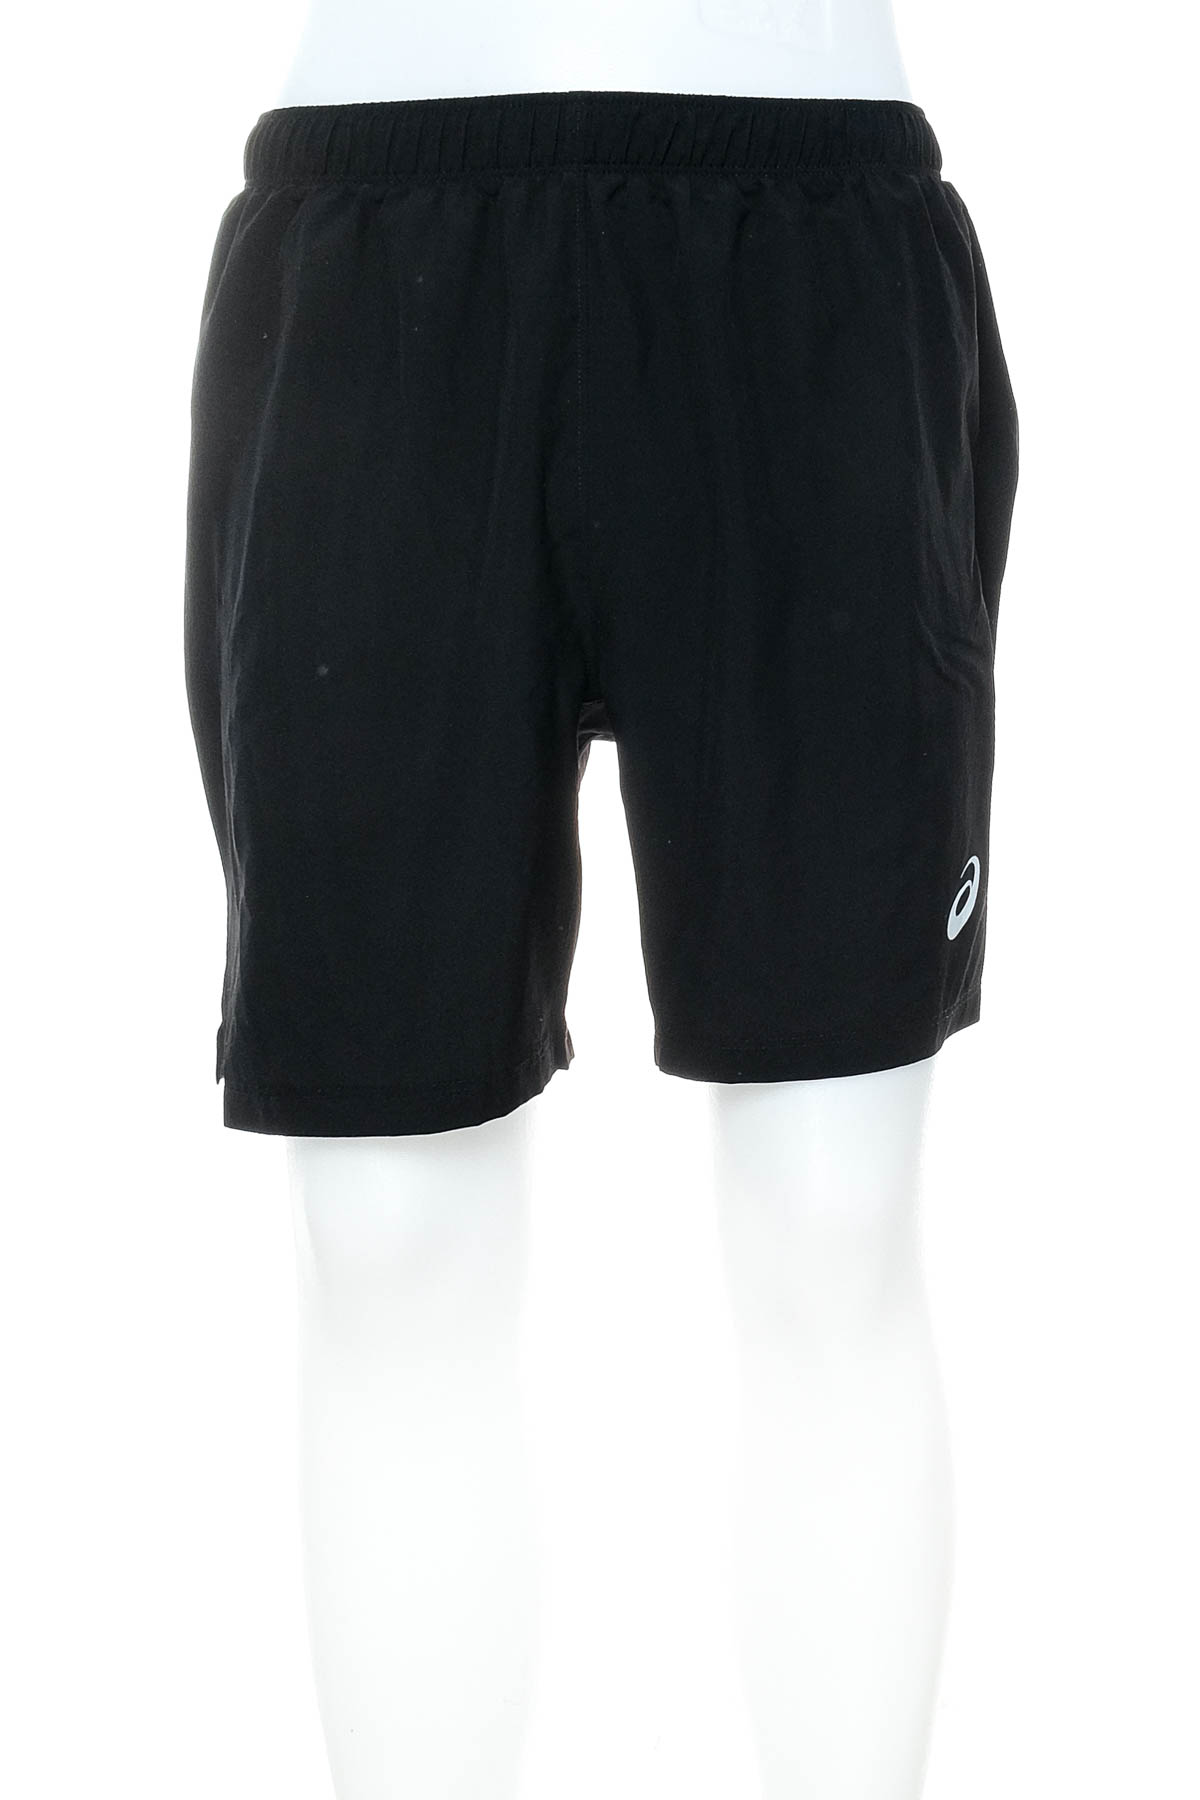 Men's shorts - Asics - 0